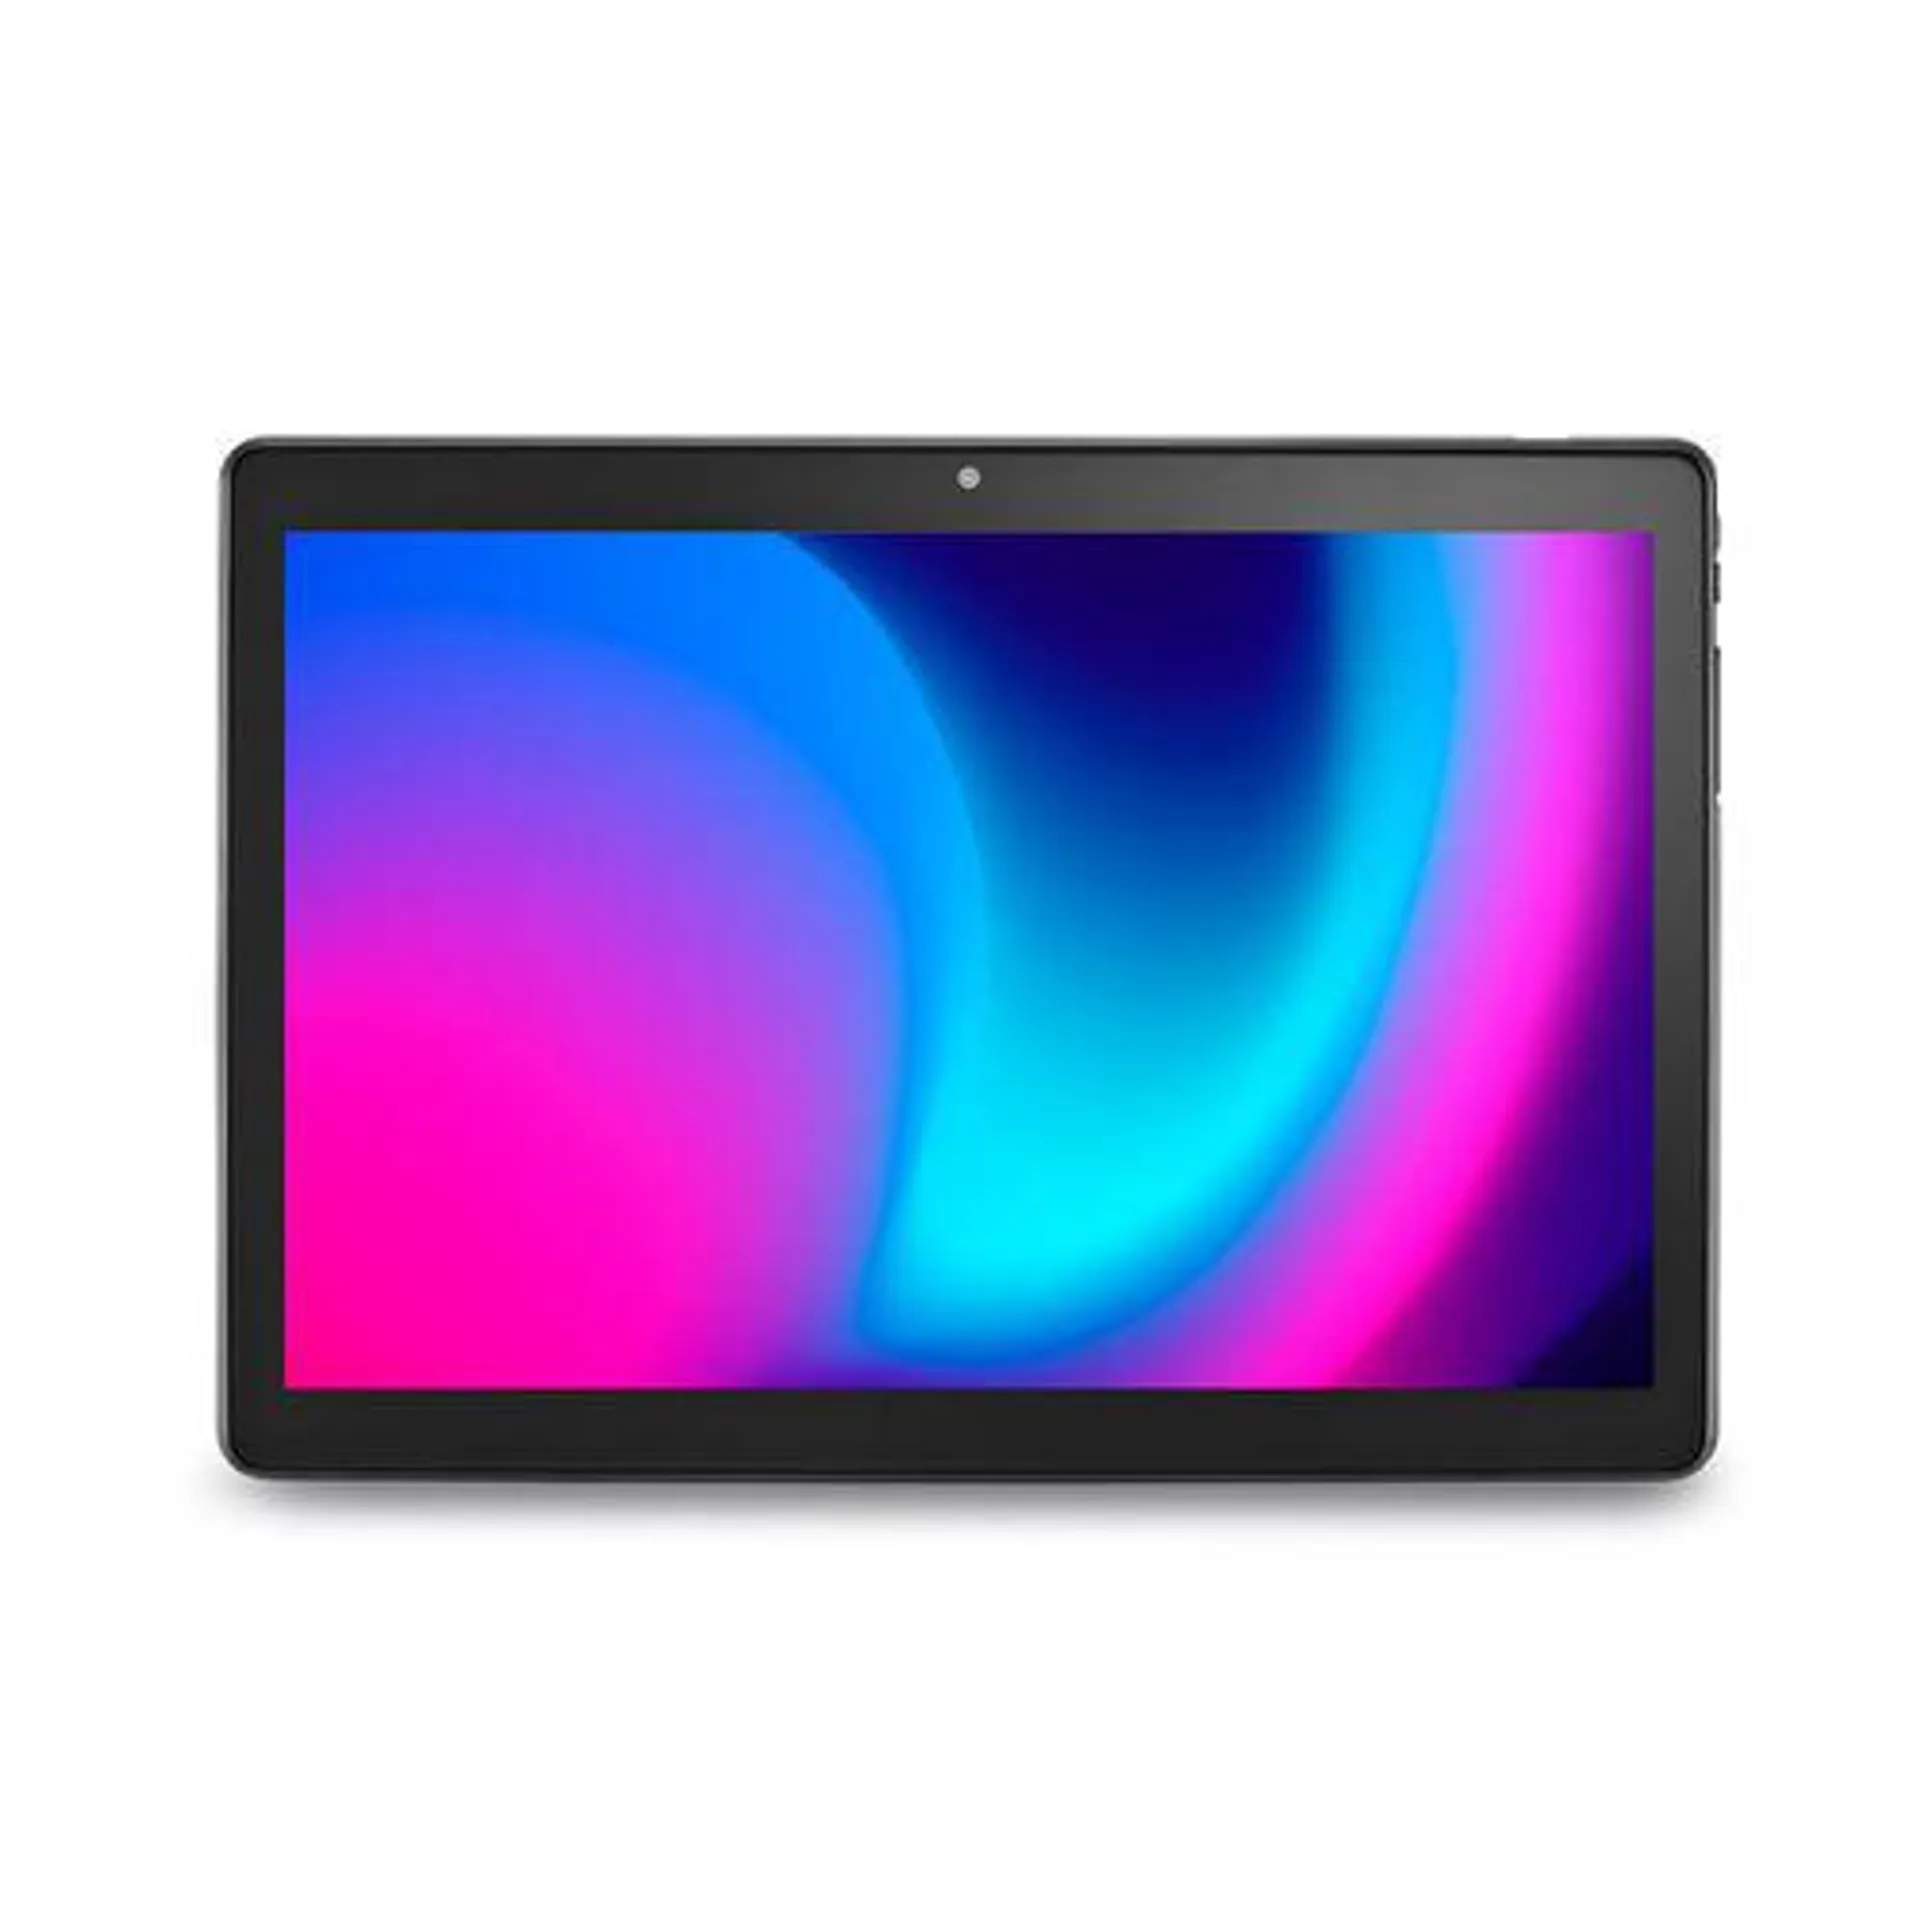 Tablet Multi M10 4G 32GB Tela 10.1 Pol. 2GB RAM WIFI Dual Band com Google Kids Space Android 11 Go Edition Preto - NB366 - Multilaser